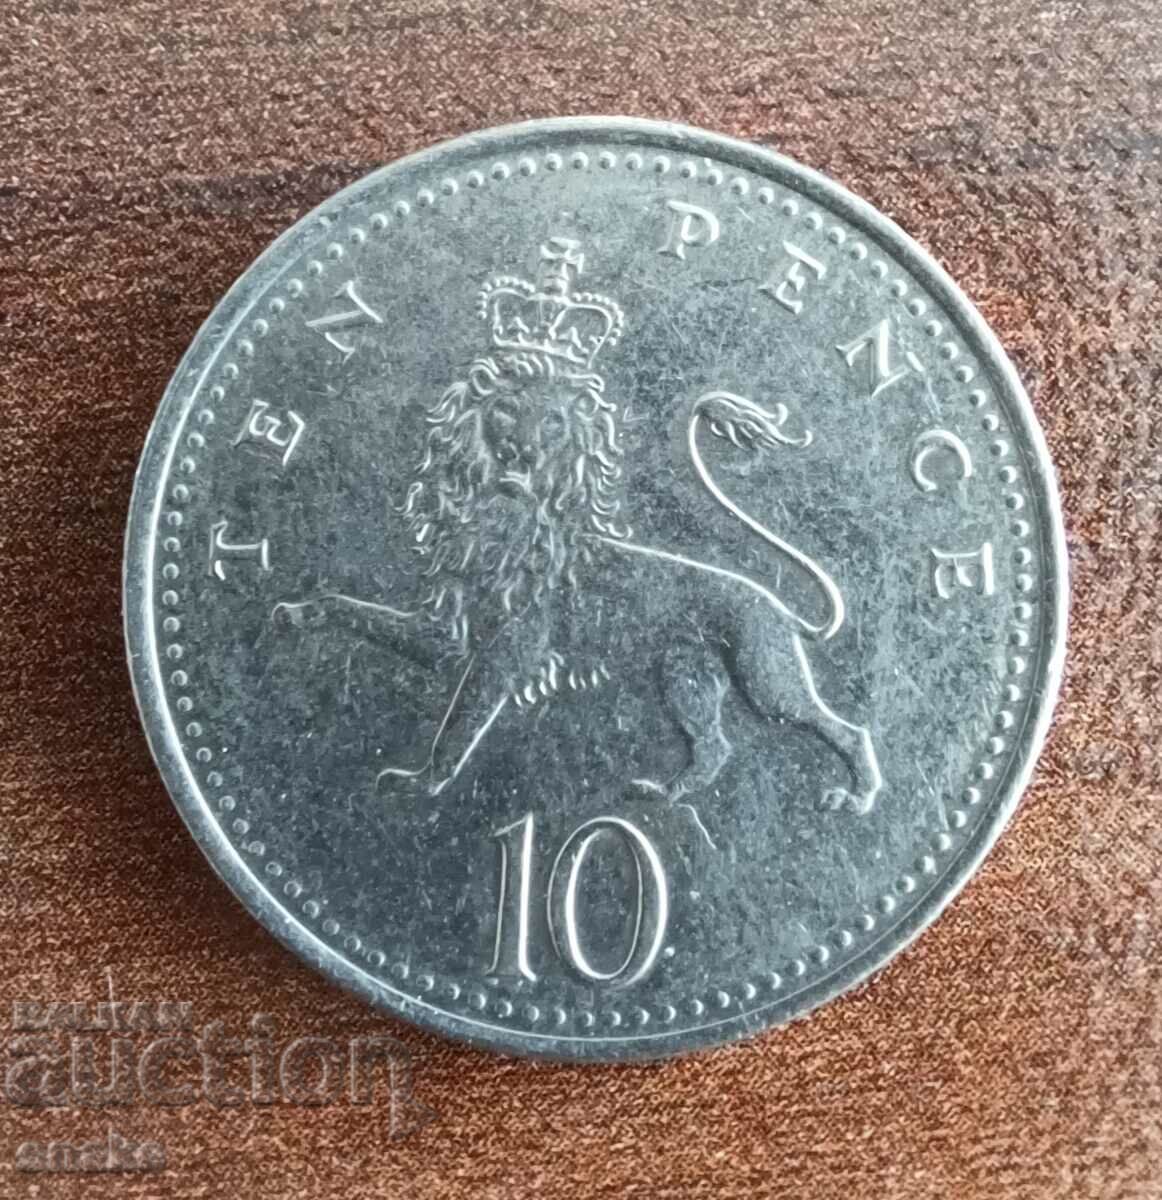 Great Britain 10 pence 2005